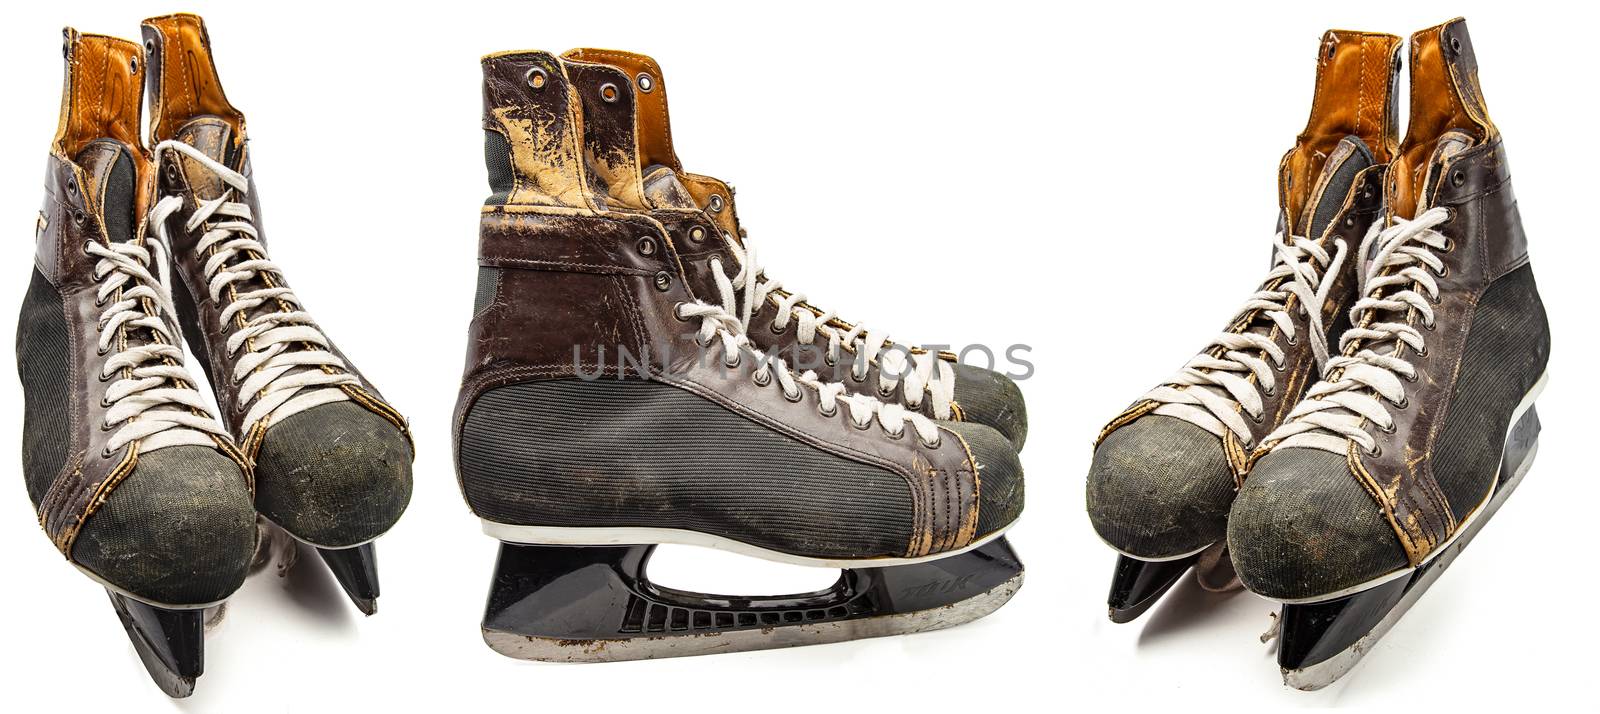 Vintage leather skates by mypstudio